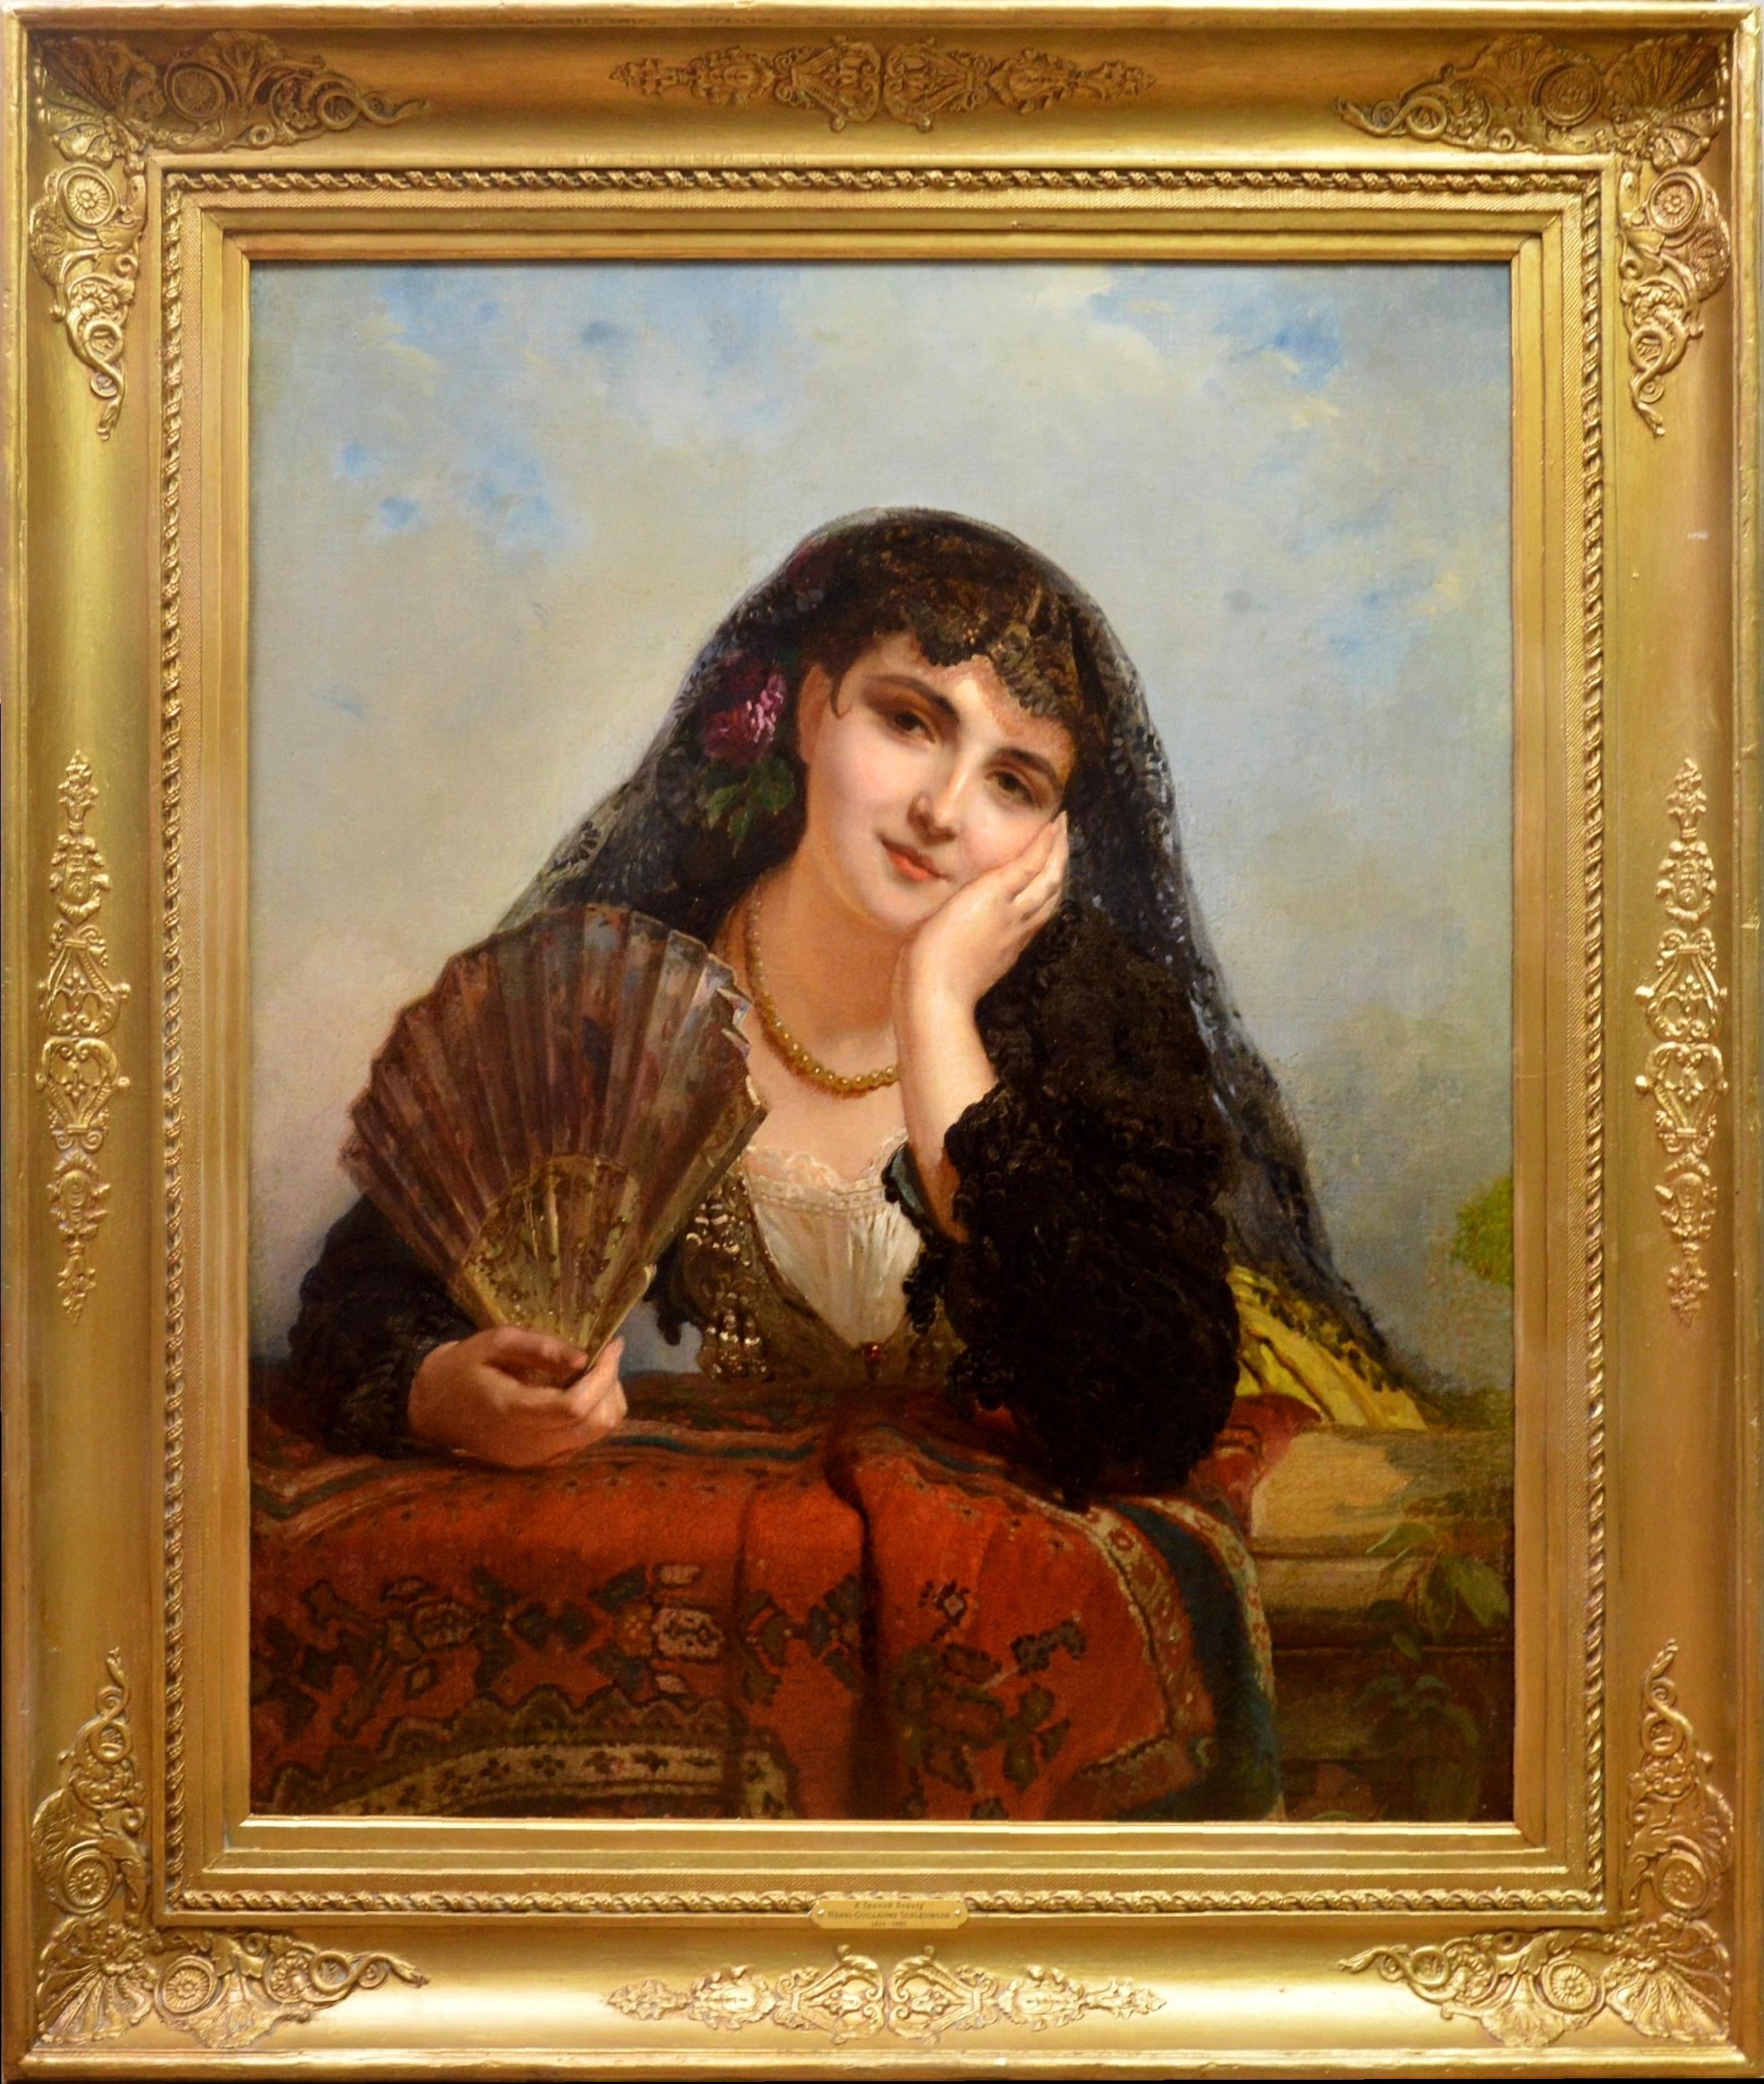 Henri-Guillaume Schlesinger Figurative Painting - A Spanish Beauty - 19th Century Portrait of Girl with Fan - 1863 Paris Salon